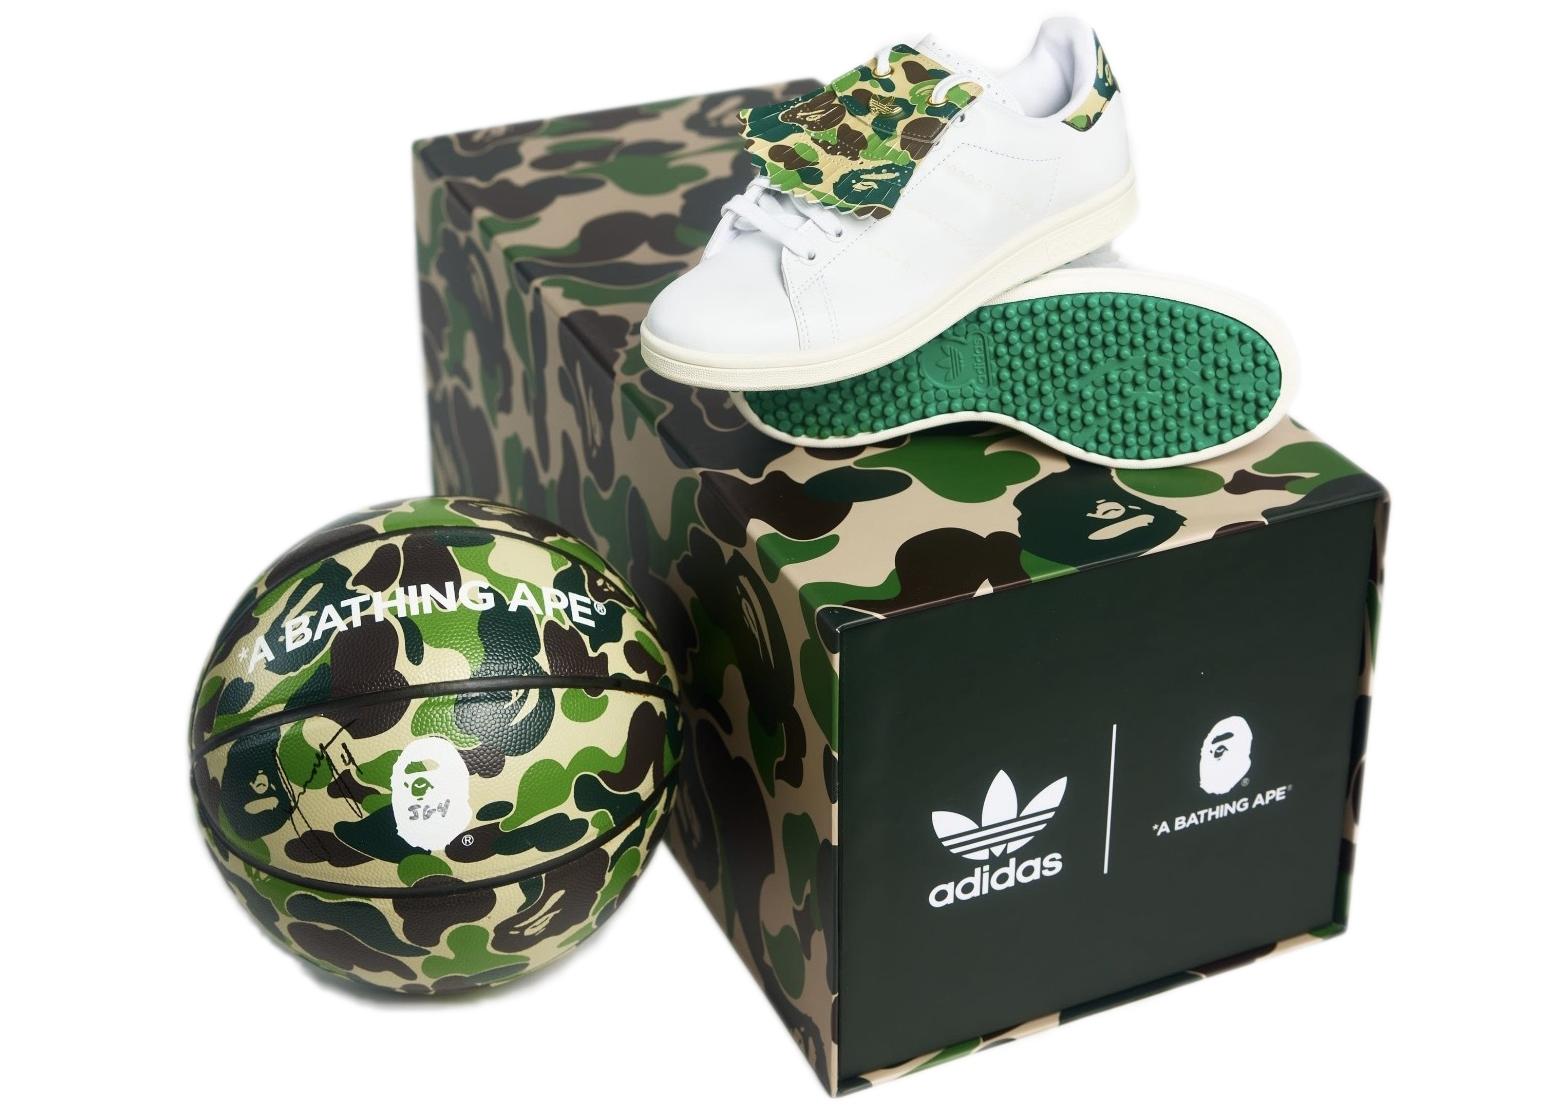 adidas Stan Smith Golf Bape 30th Anniversary (Collectors Box